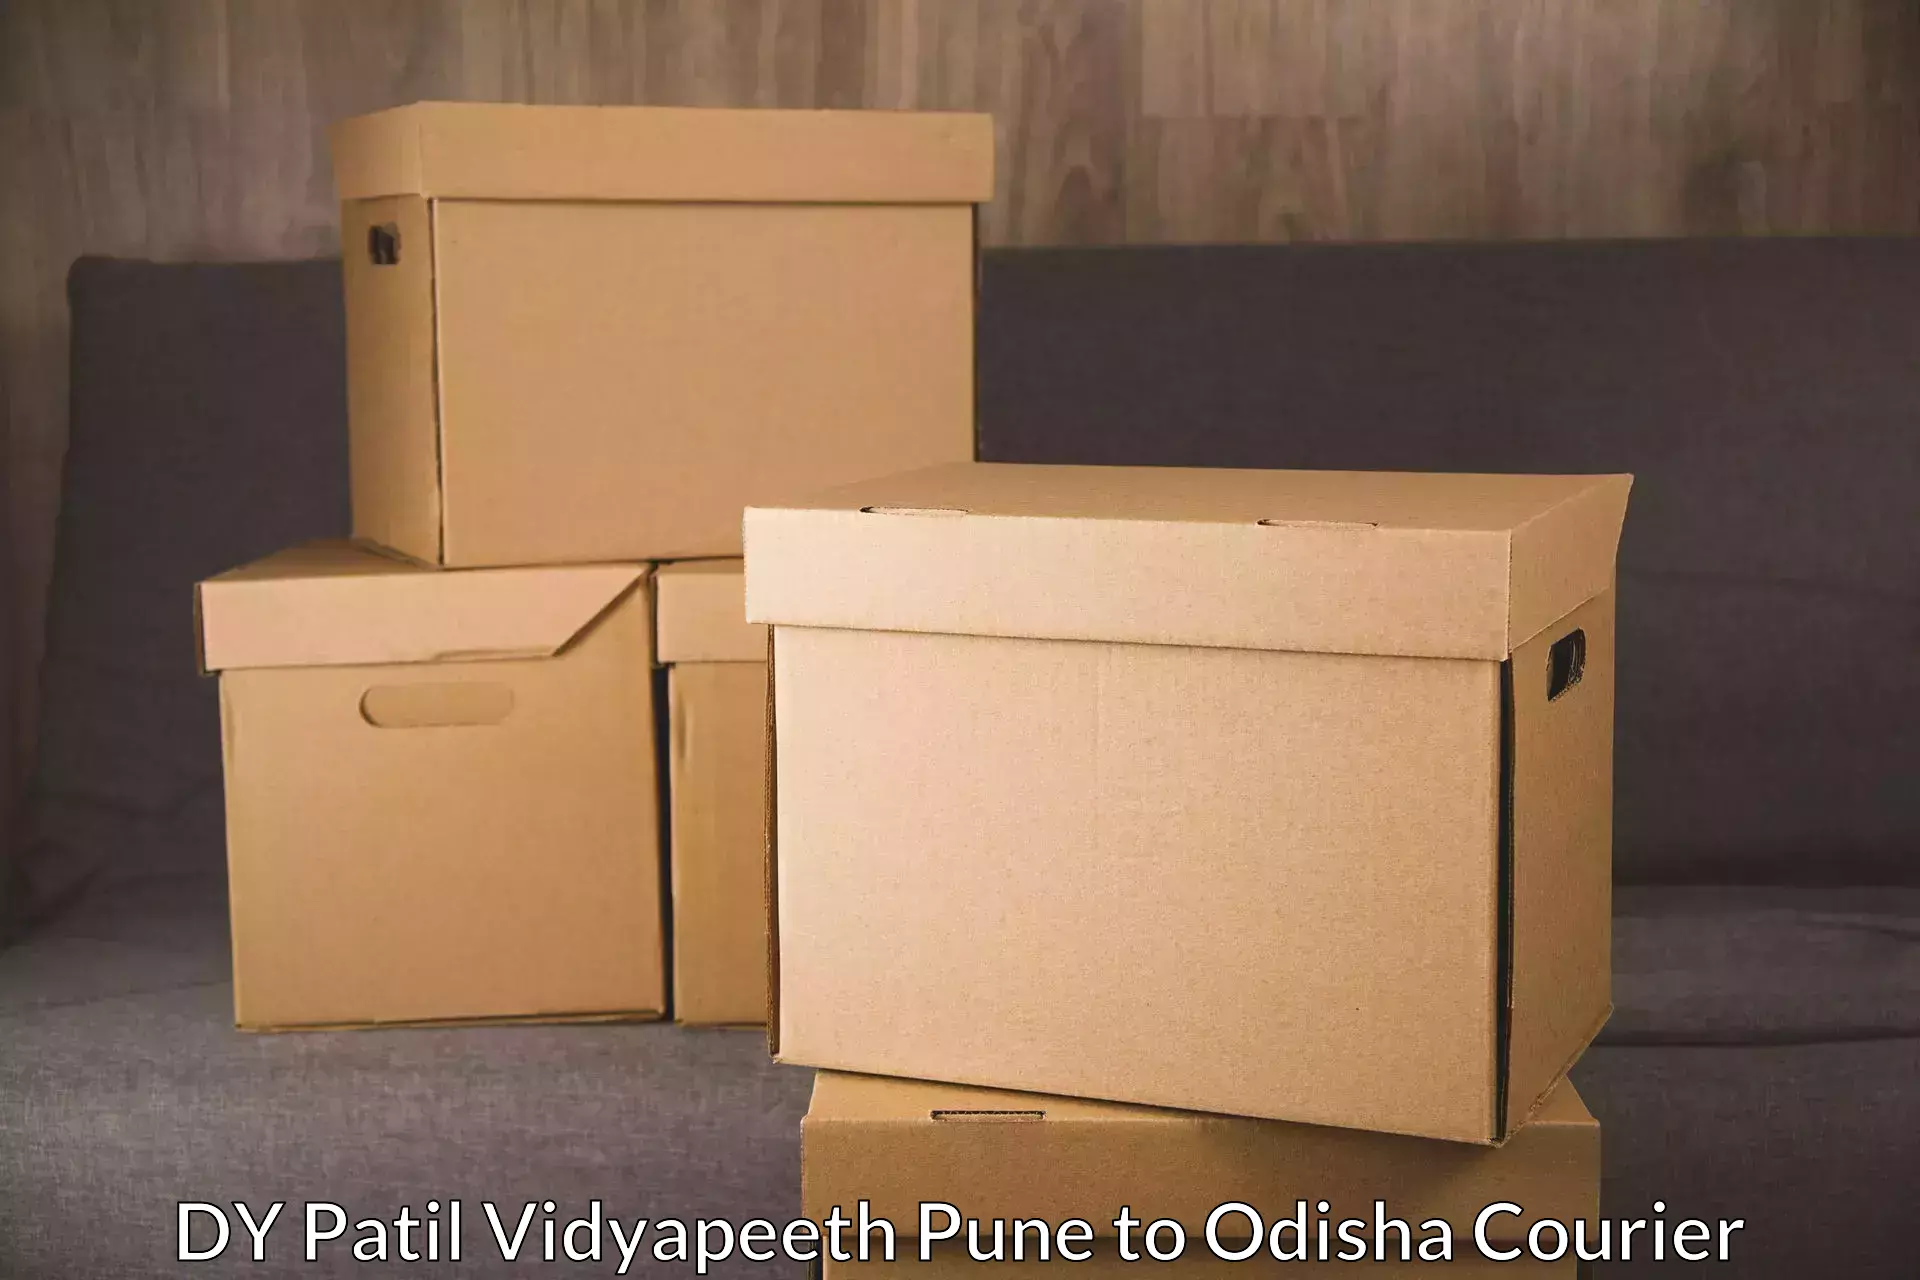 Professional courier handling DY Patil Vidyapeeth Pune to Bhubaneswar